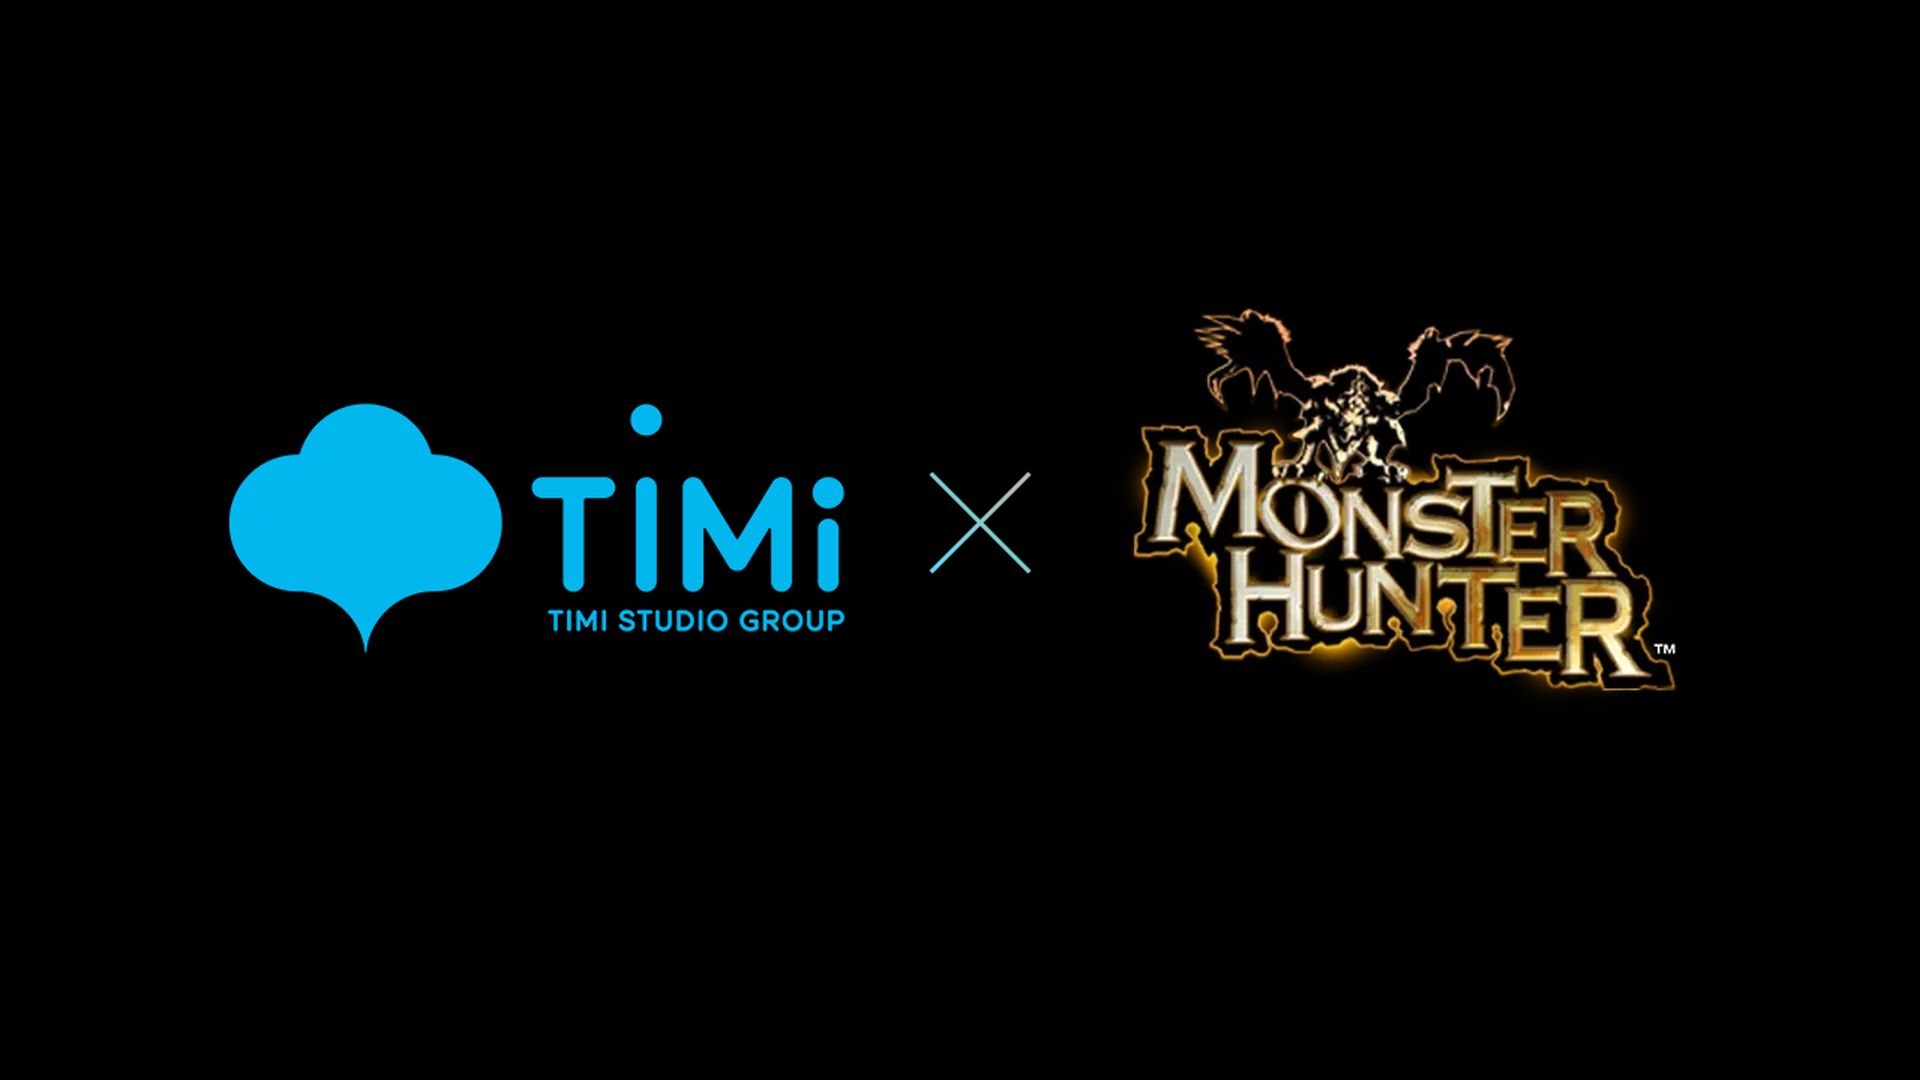 Capcom ร่วมกับ TiMi ทำเกม Monster Hunter ใหม่บนมือถือ